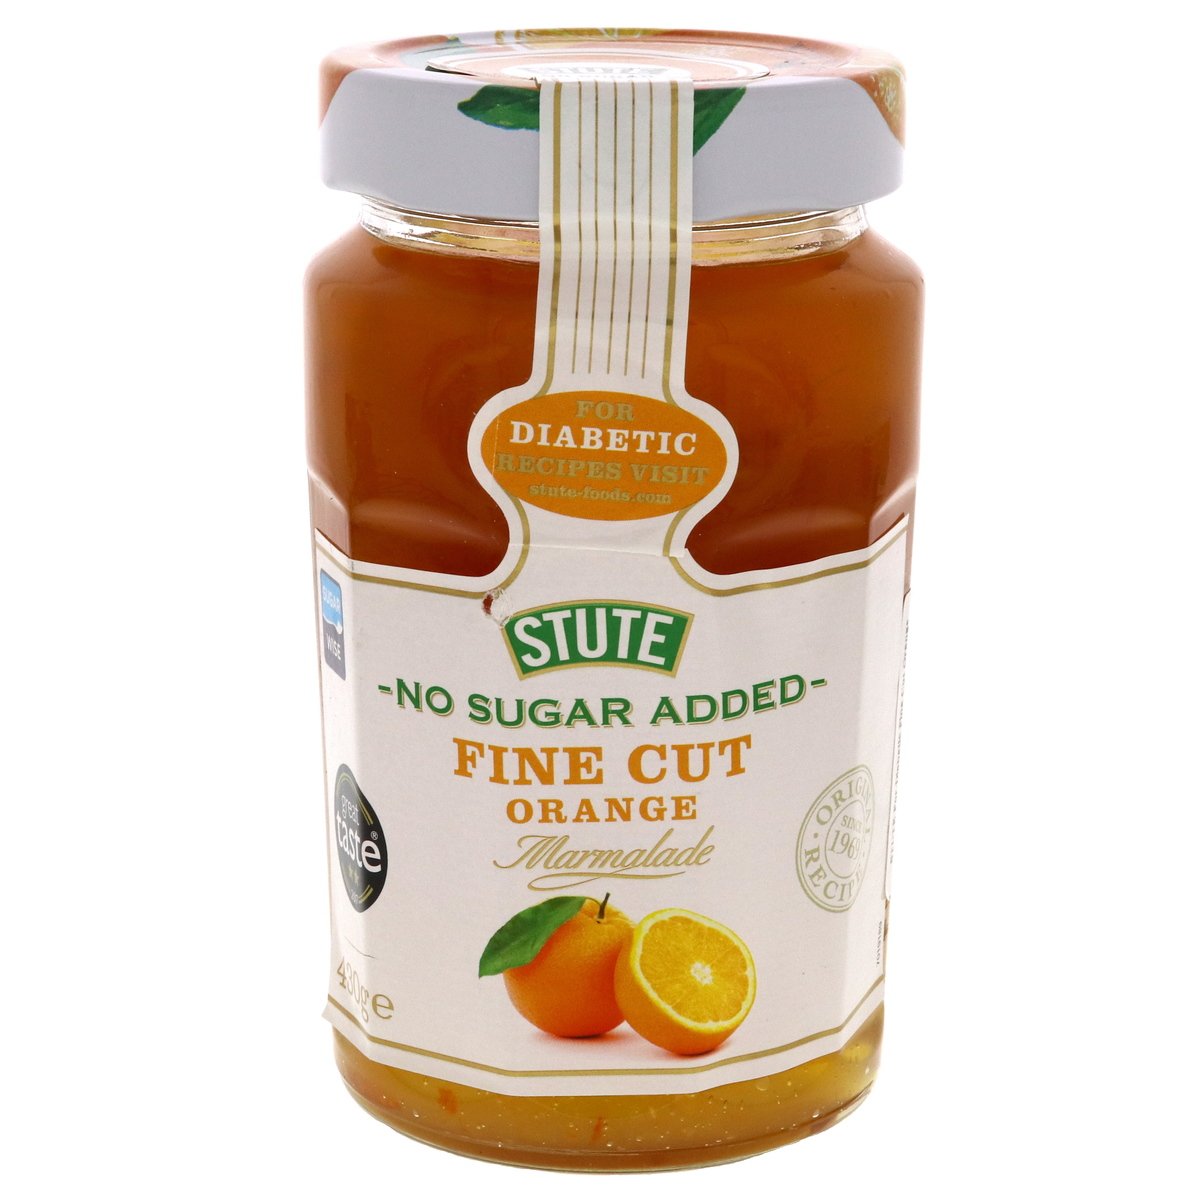 Stute Diabetic Fine Cut Orange Marmalade 430 g